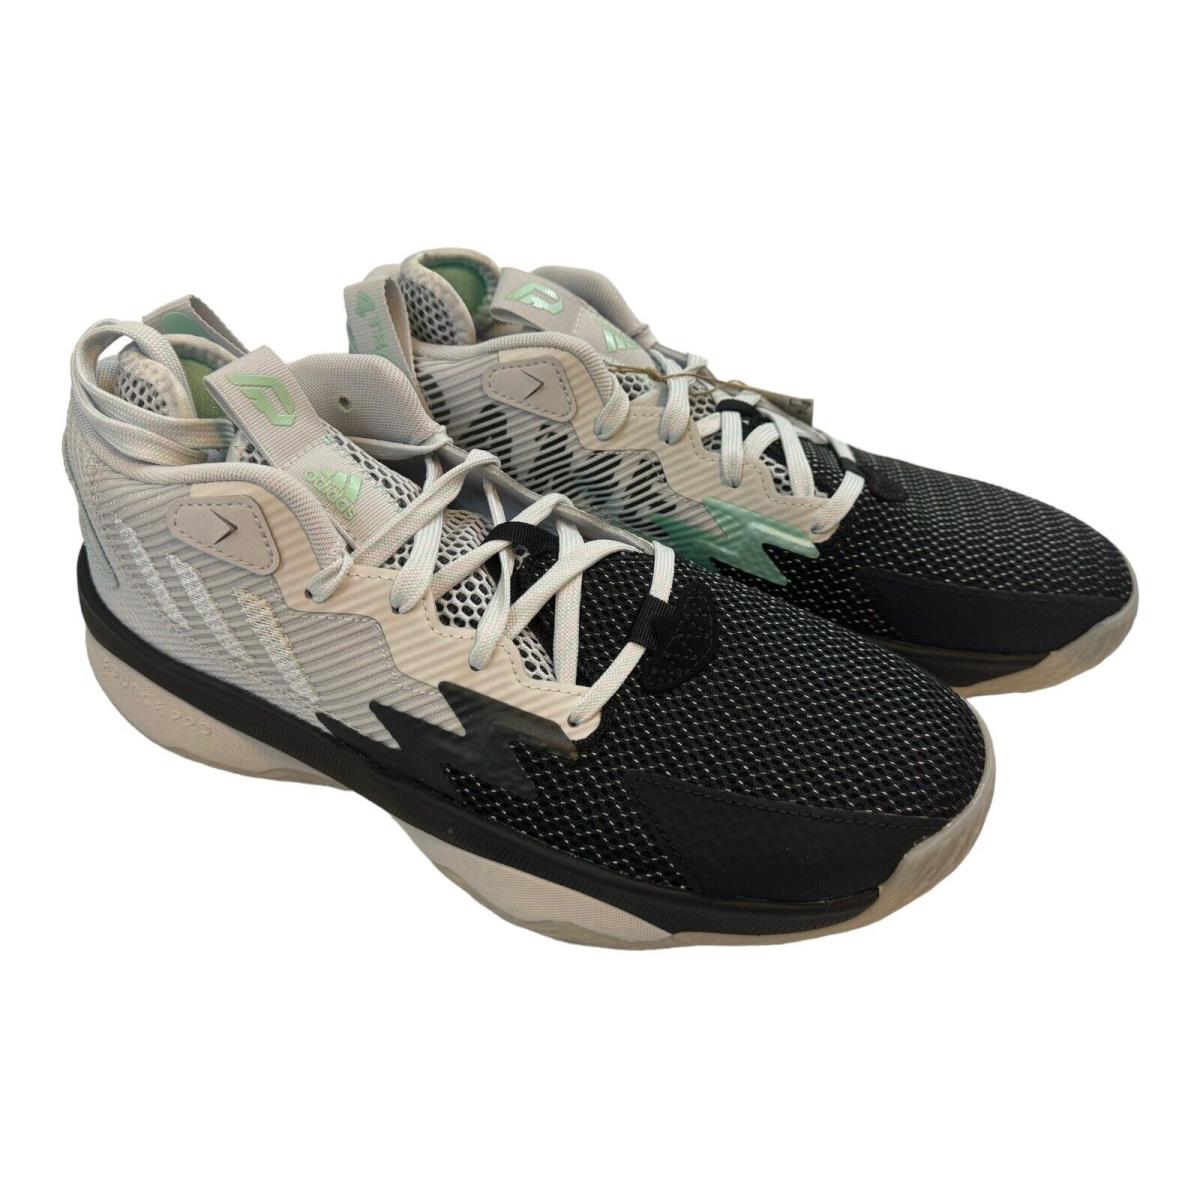 Adidas Dame 8 Basketball Shoes Dash Gray Black GY0379 Men`s Size 8.5 - Gray